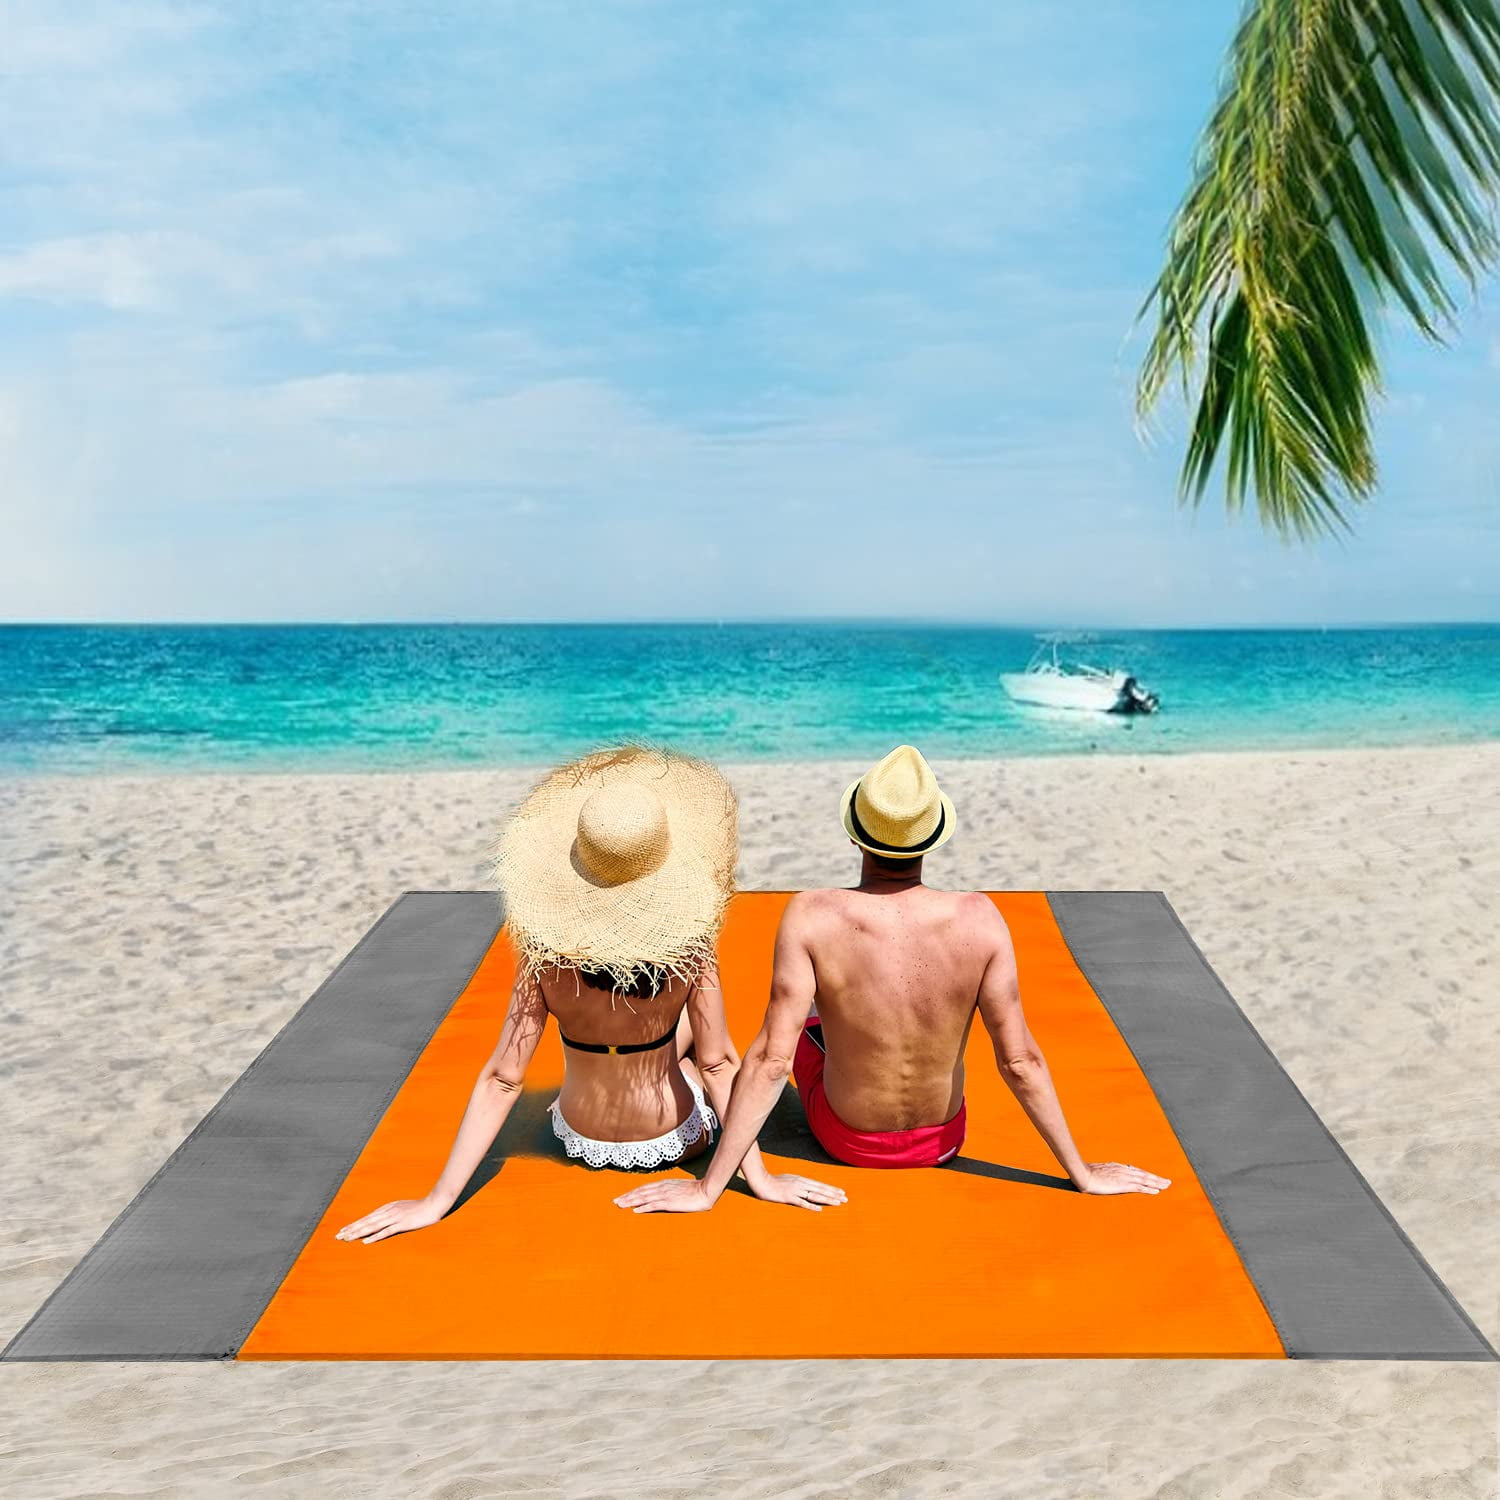 Extra Large Picnic BlanketOversized Beach Blanket Sand ProofPortable 